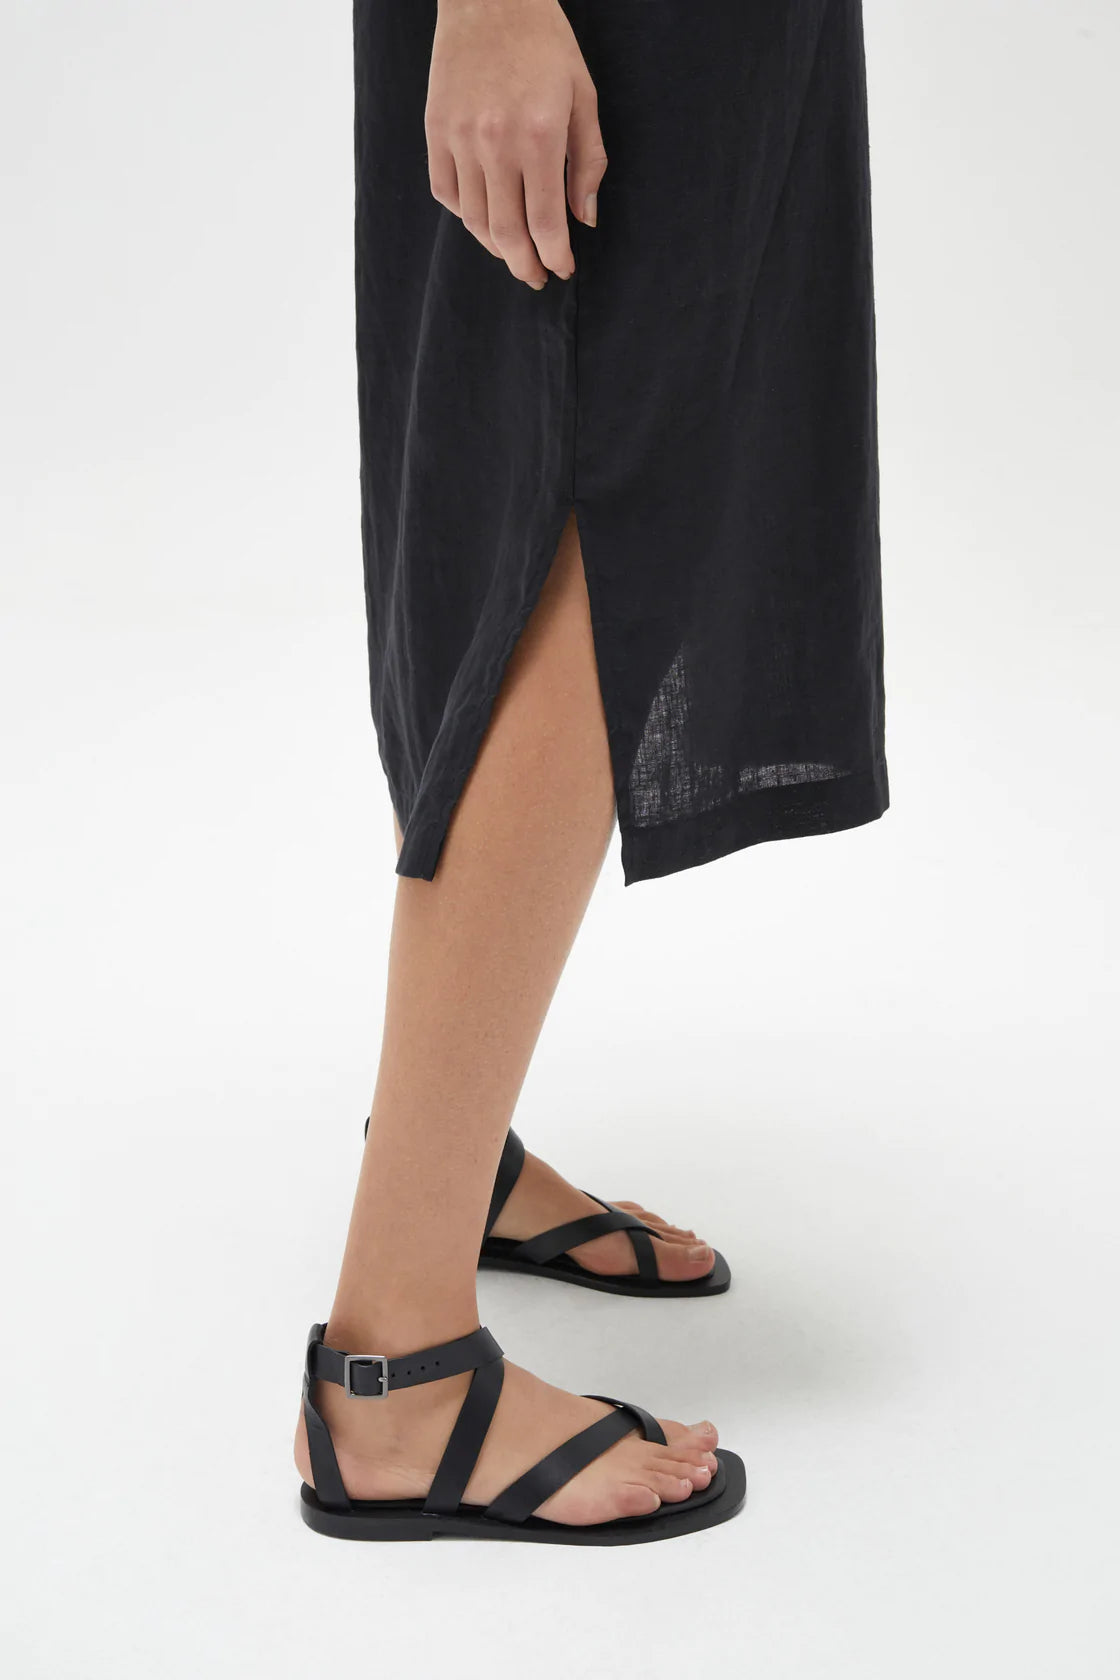 ASSEMBLY LABEL // Linen Slip Dress BLACK